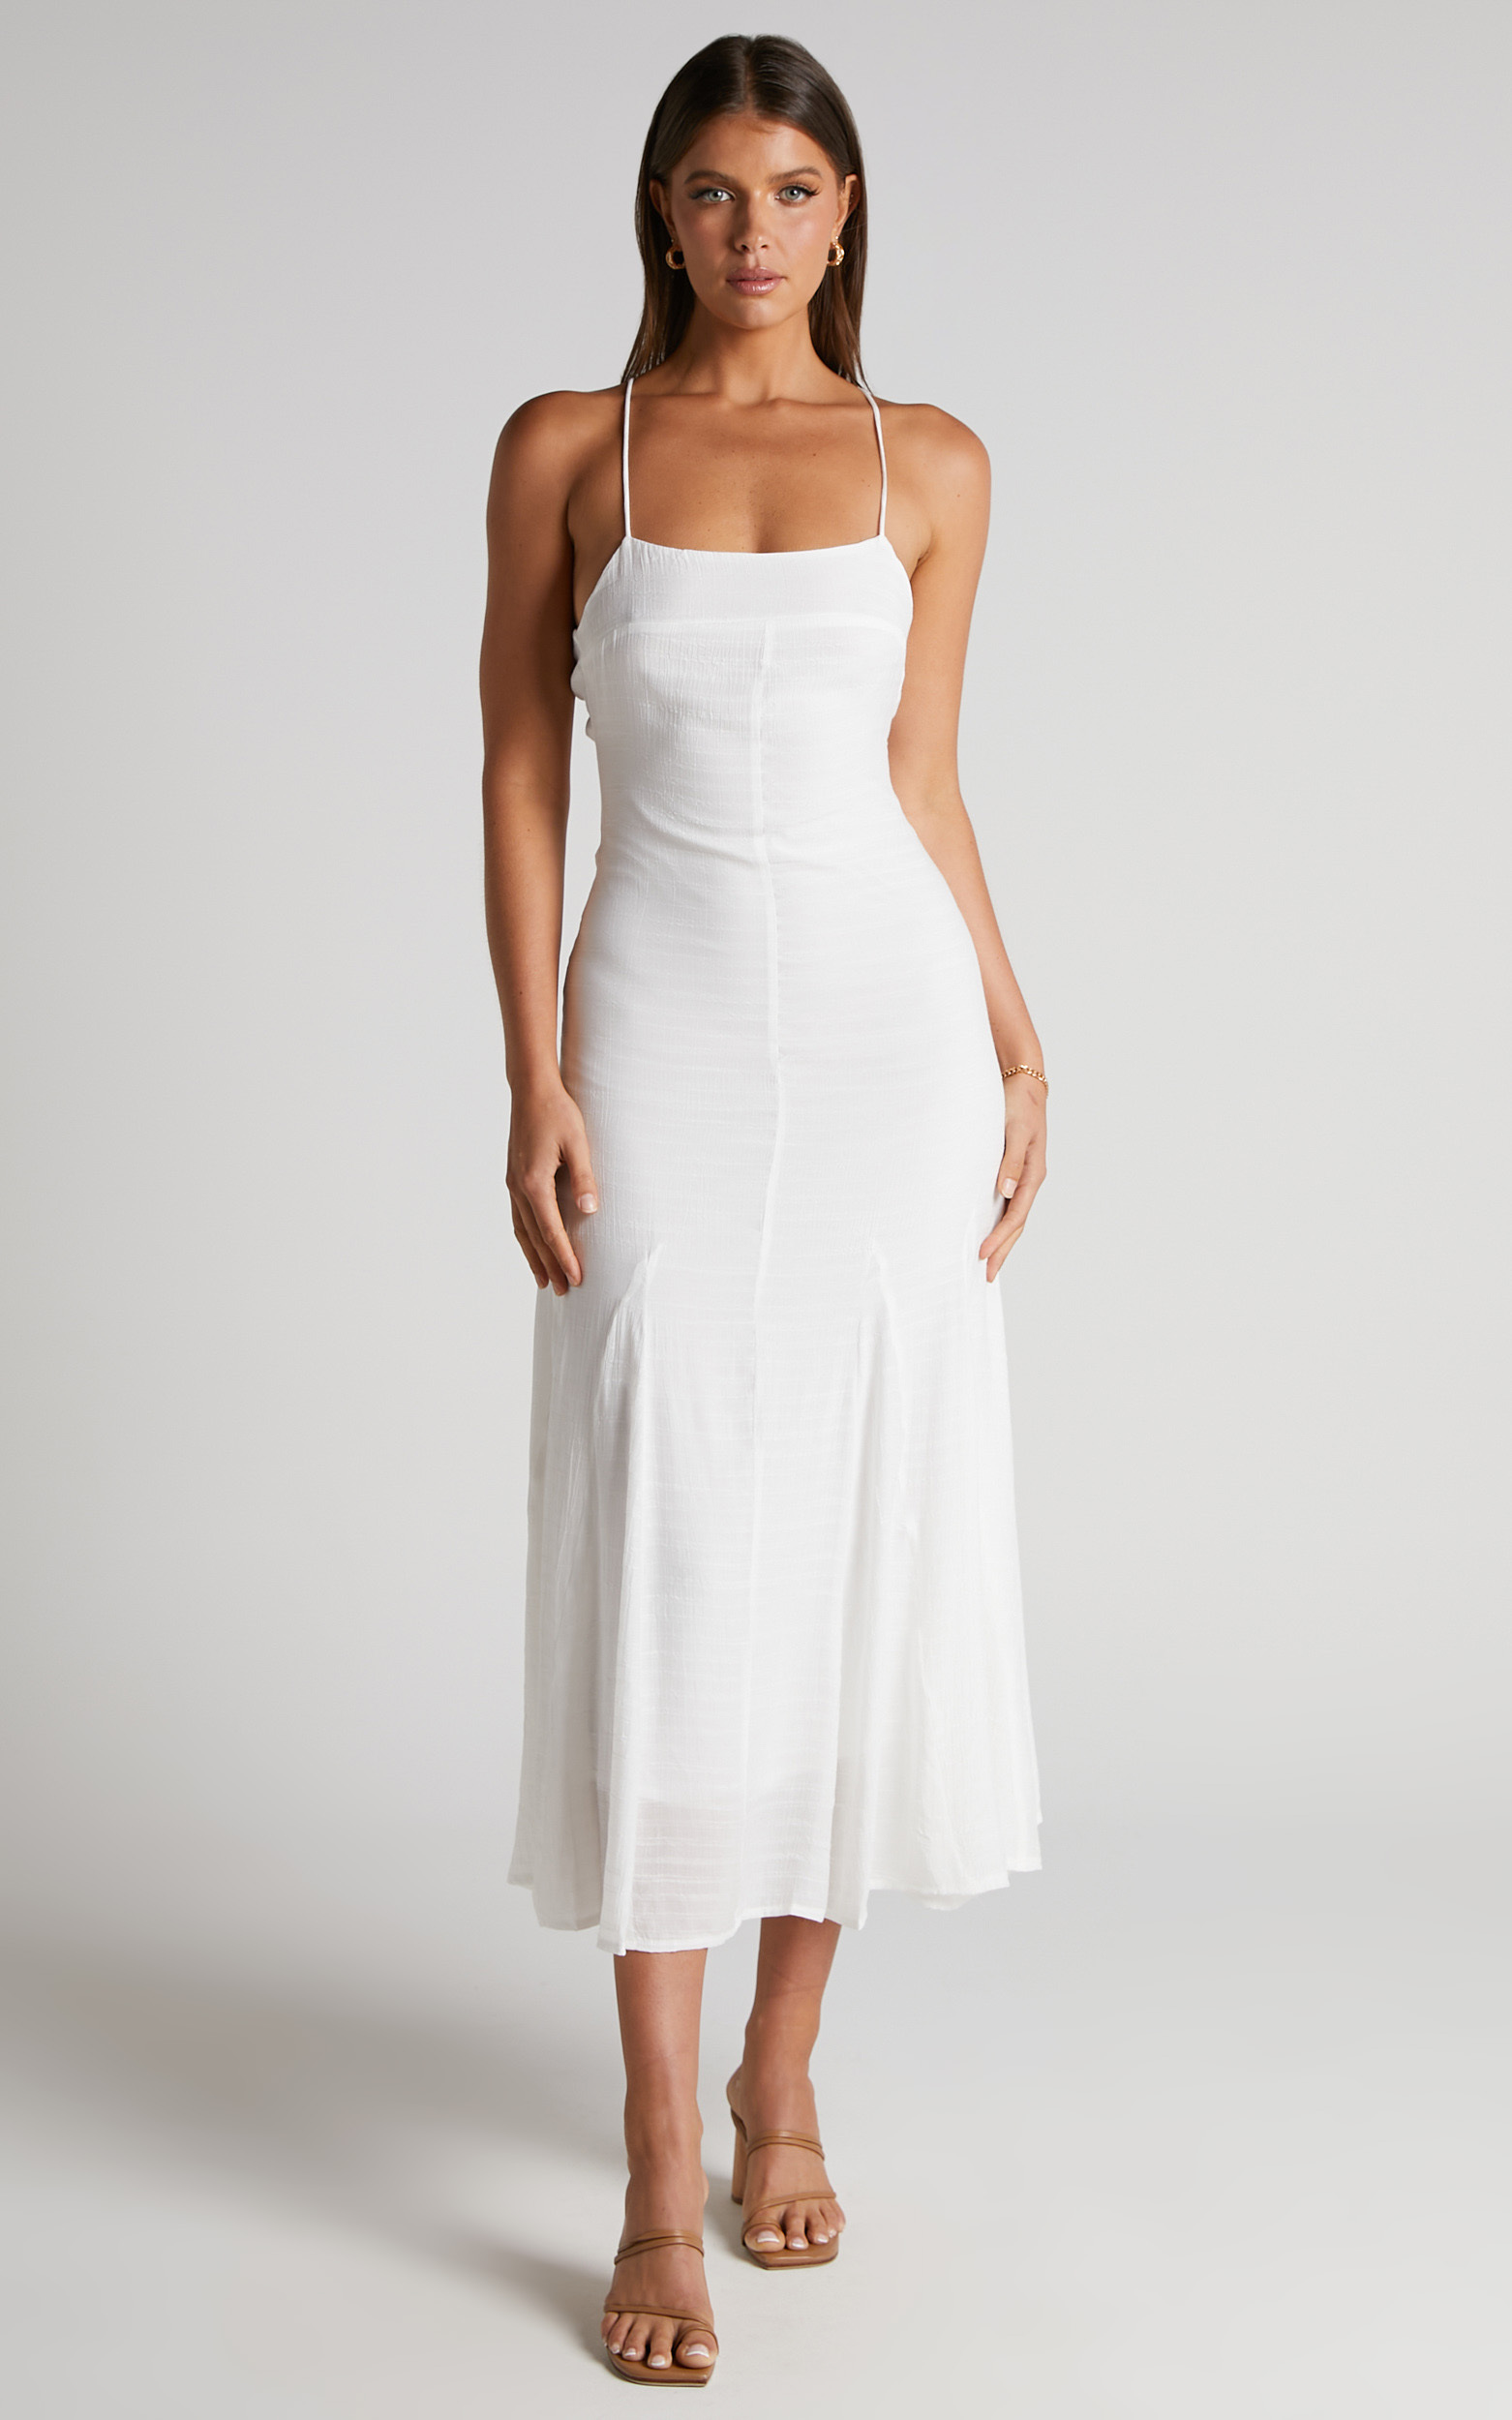 Romarie Midi Dress - Tie Back Slip Dress in White - 06, WHT1, hi-res image number null